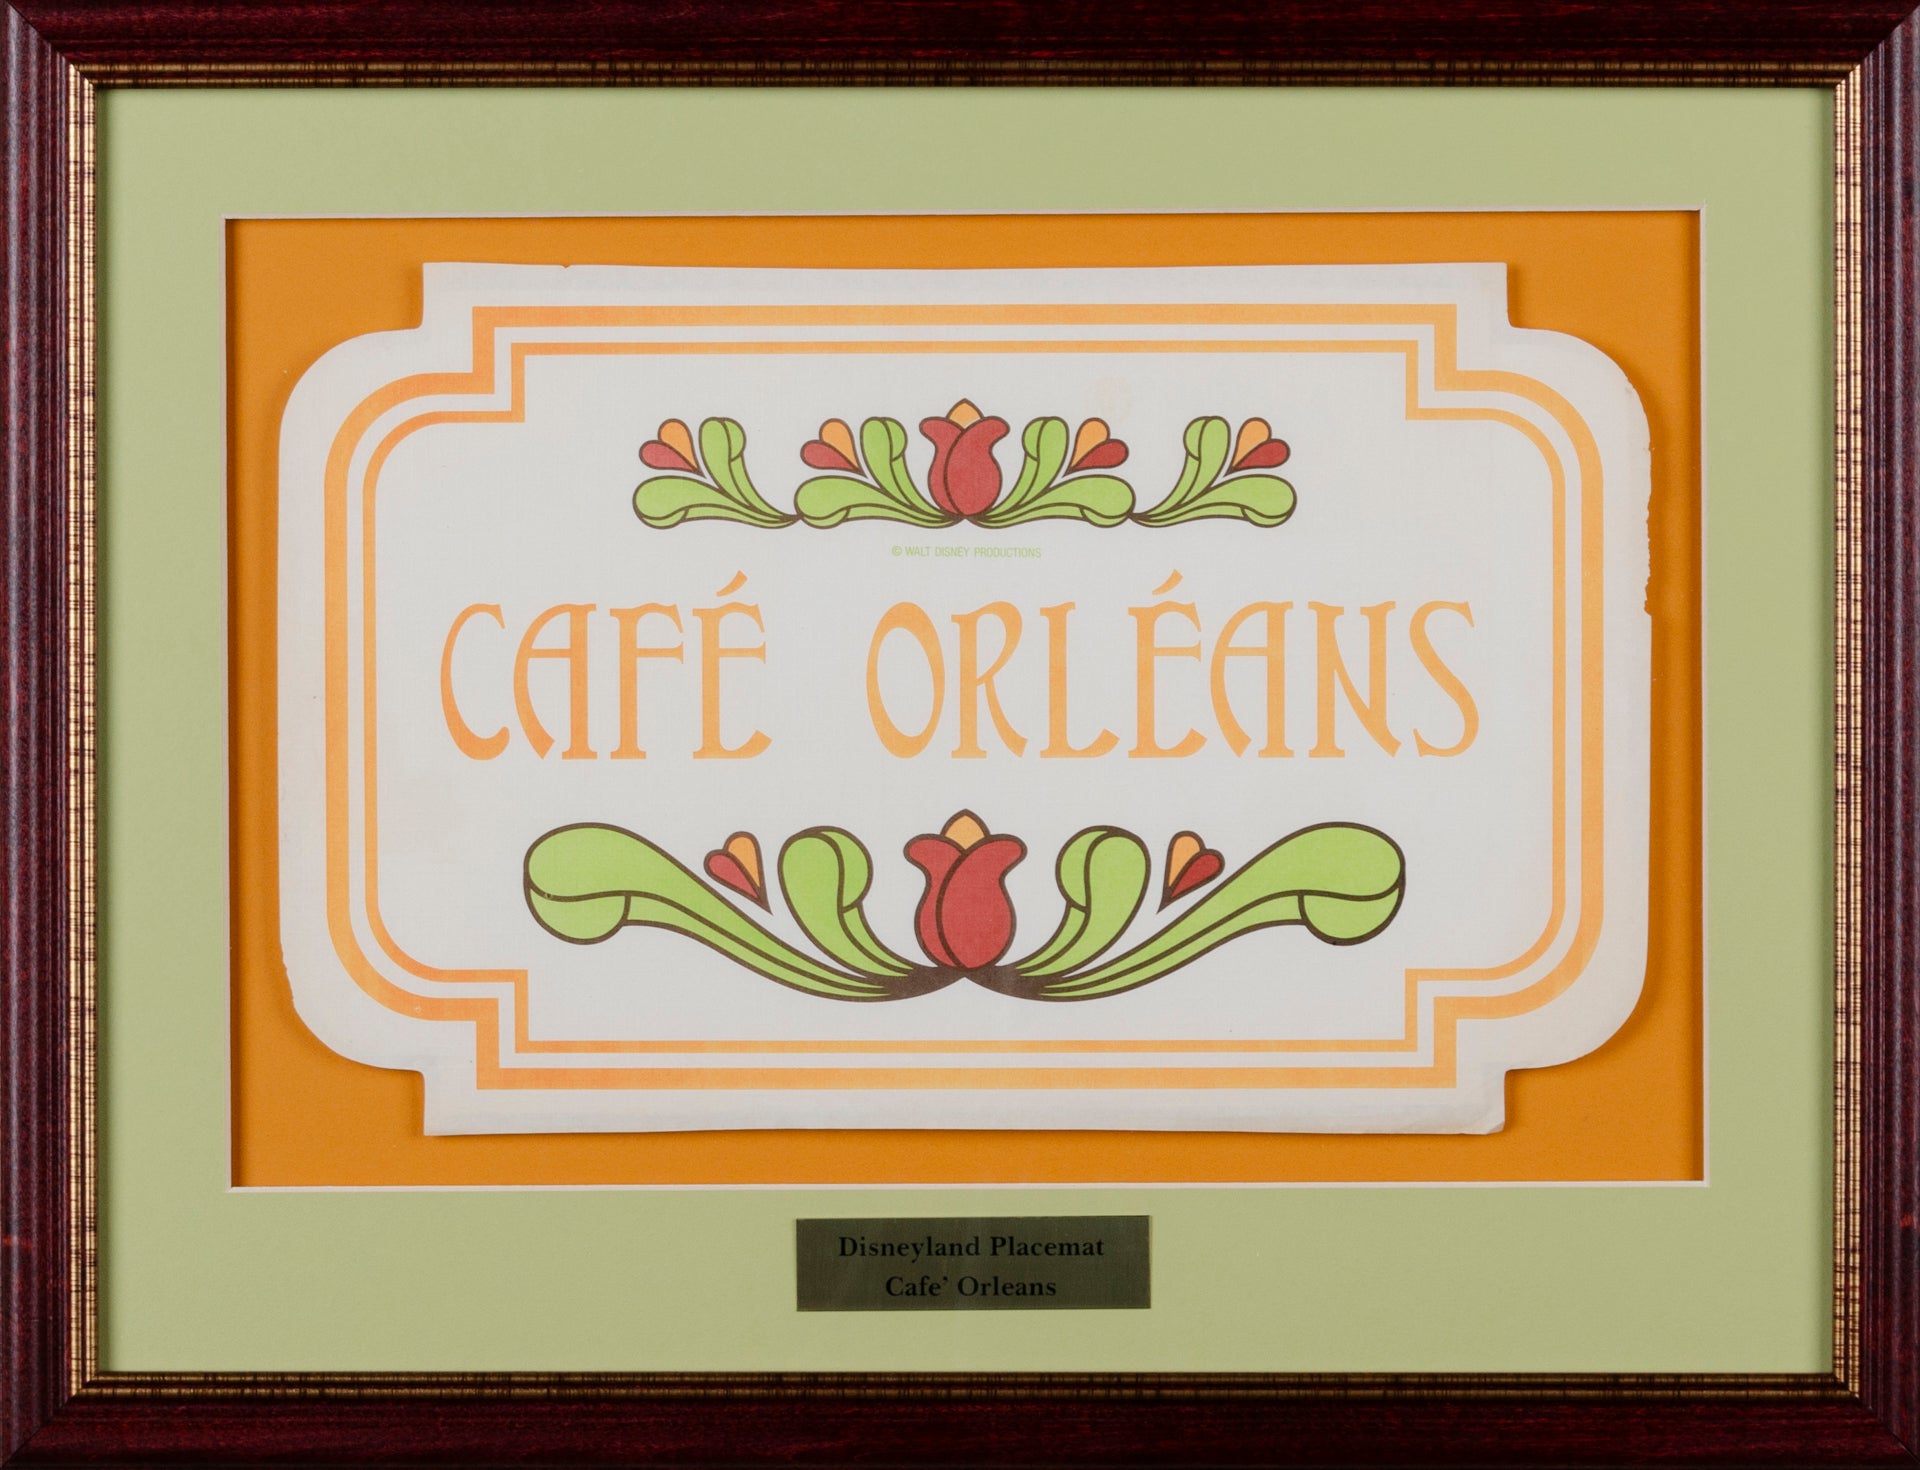 Disneyland Placemat Cafe' Orleans